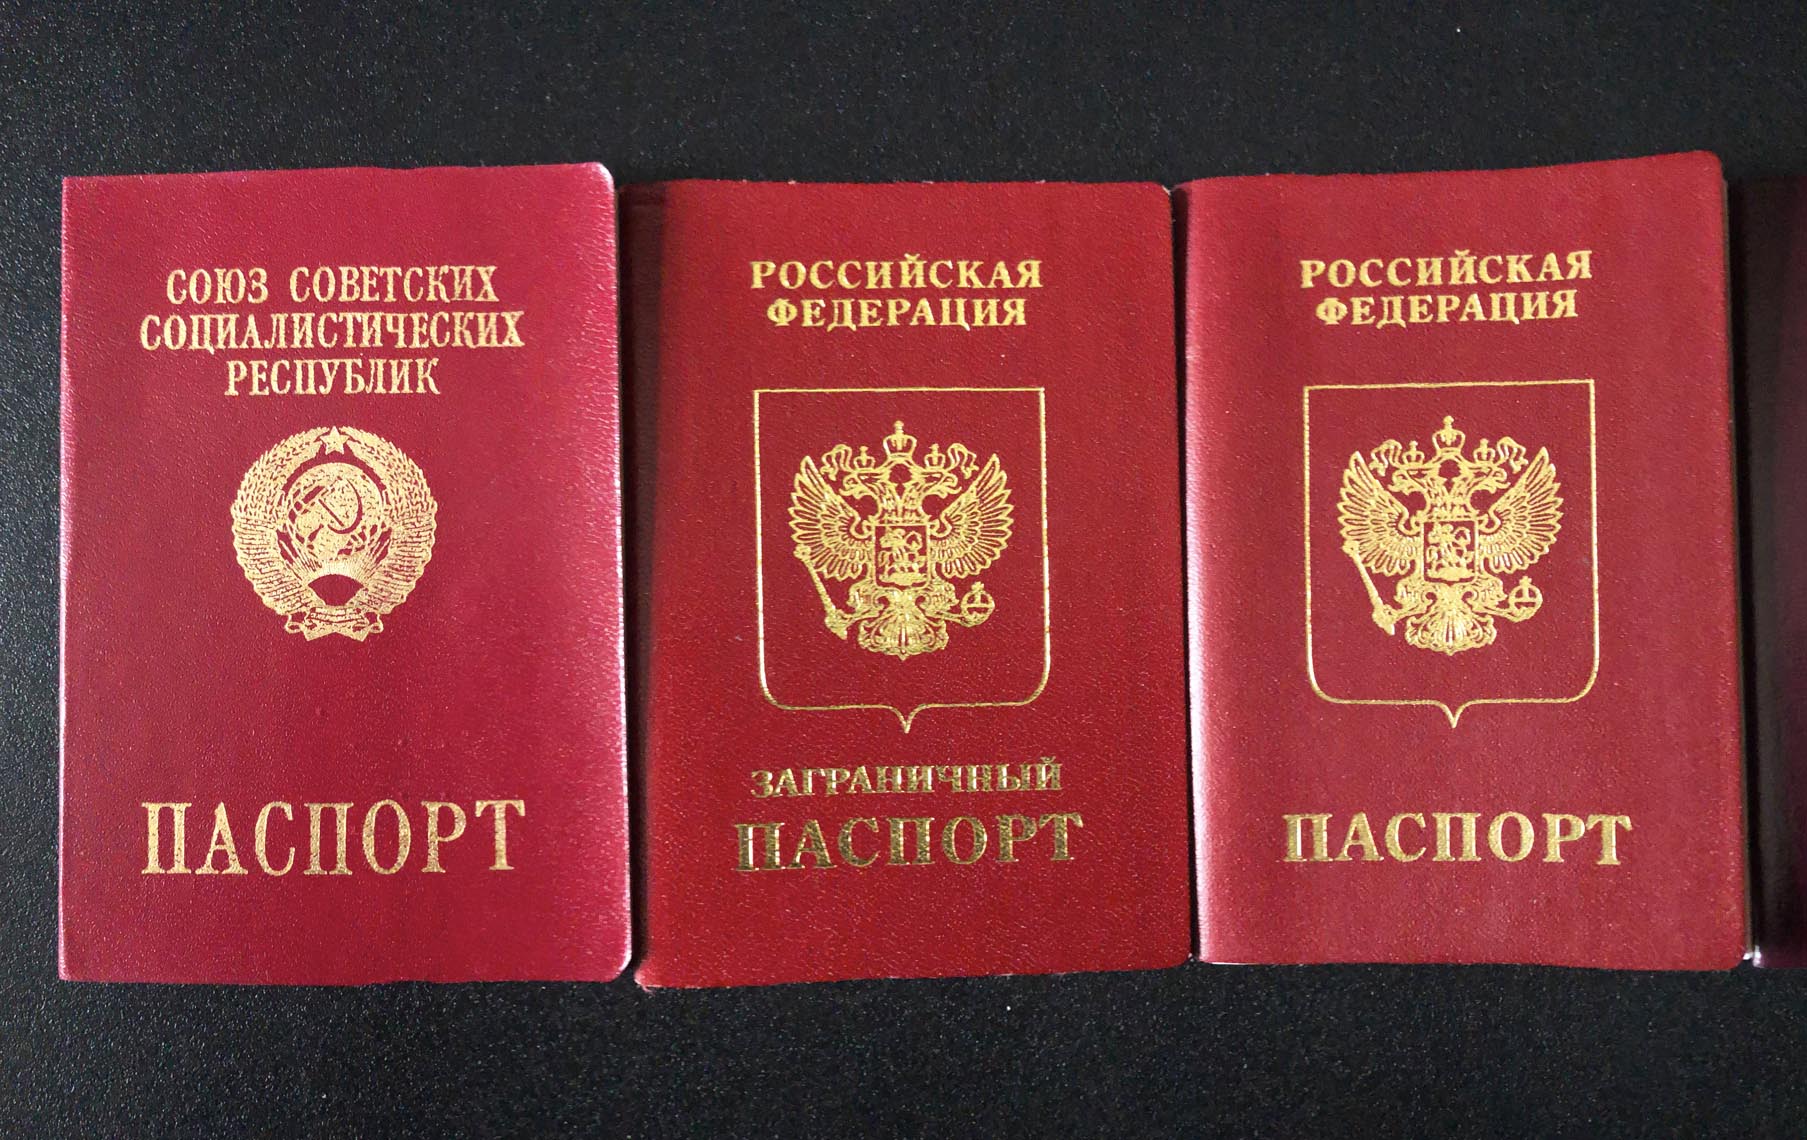 The Journey of the Third Passport